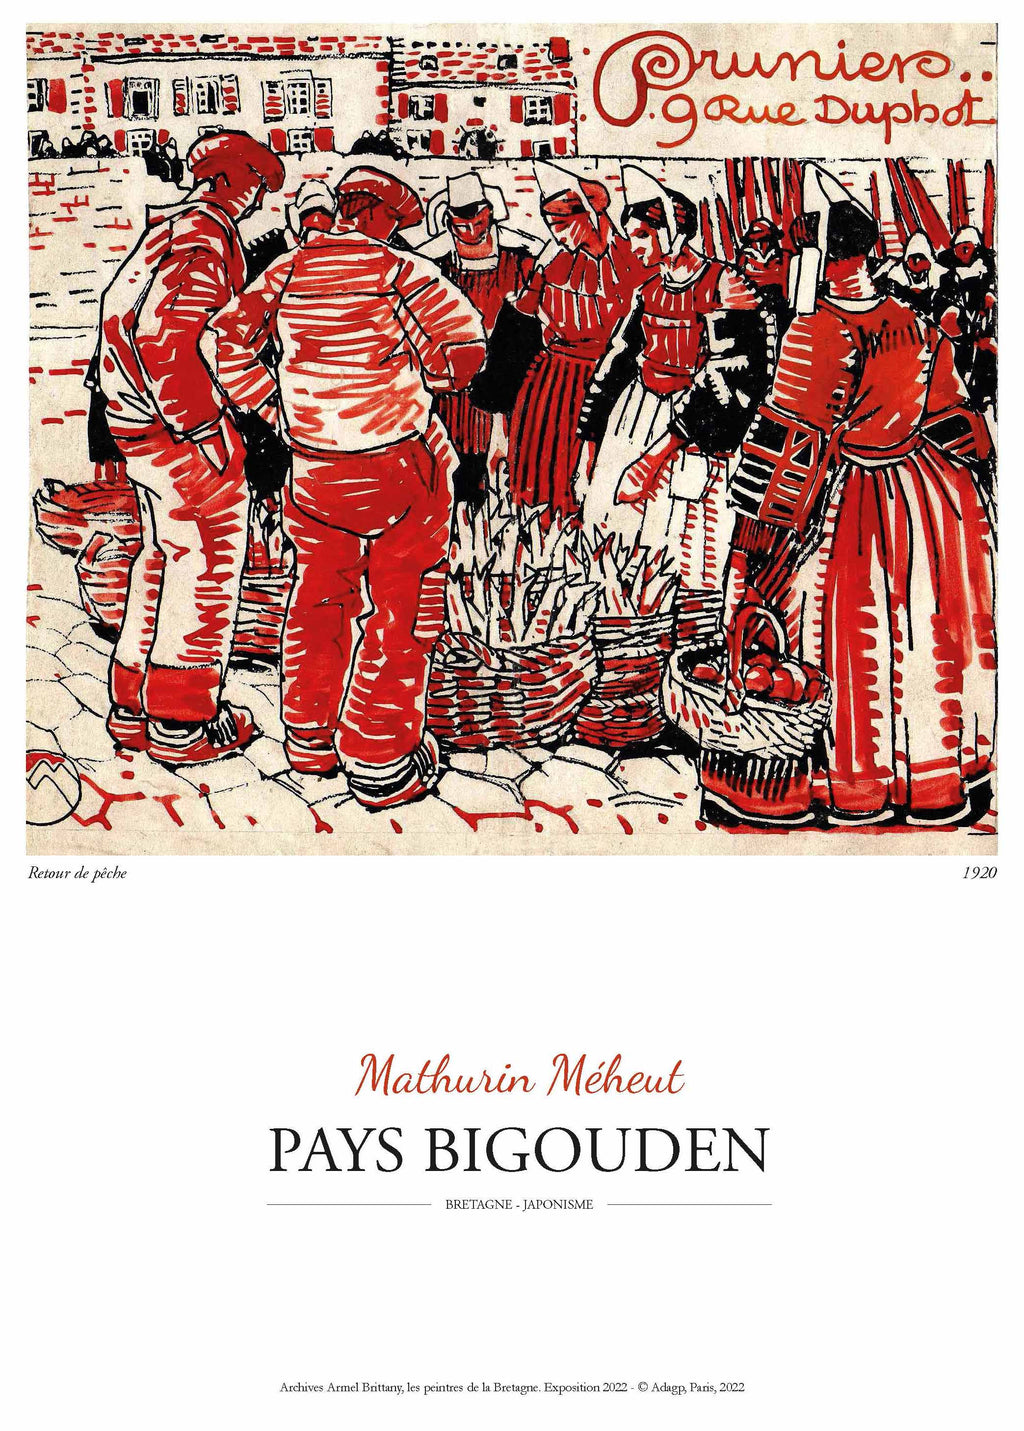 Mathurin Meheut poster de decoration pays bigouden. Marque Bretagne travel poster breton